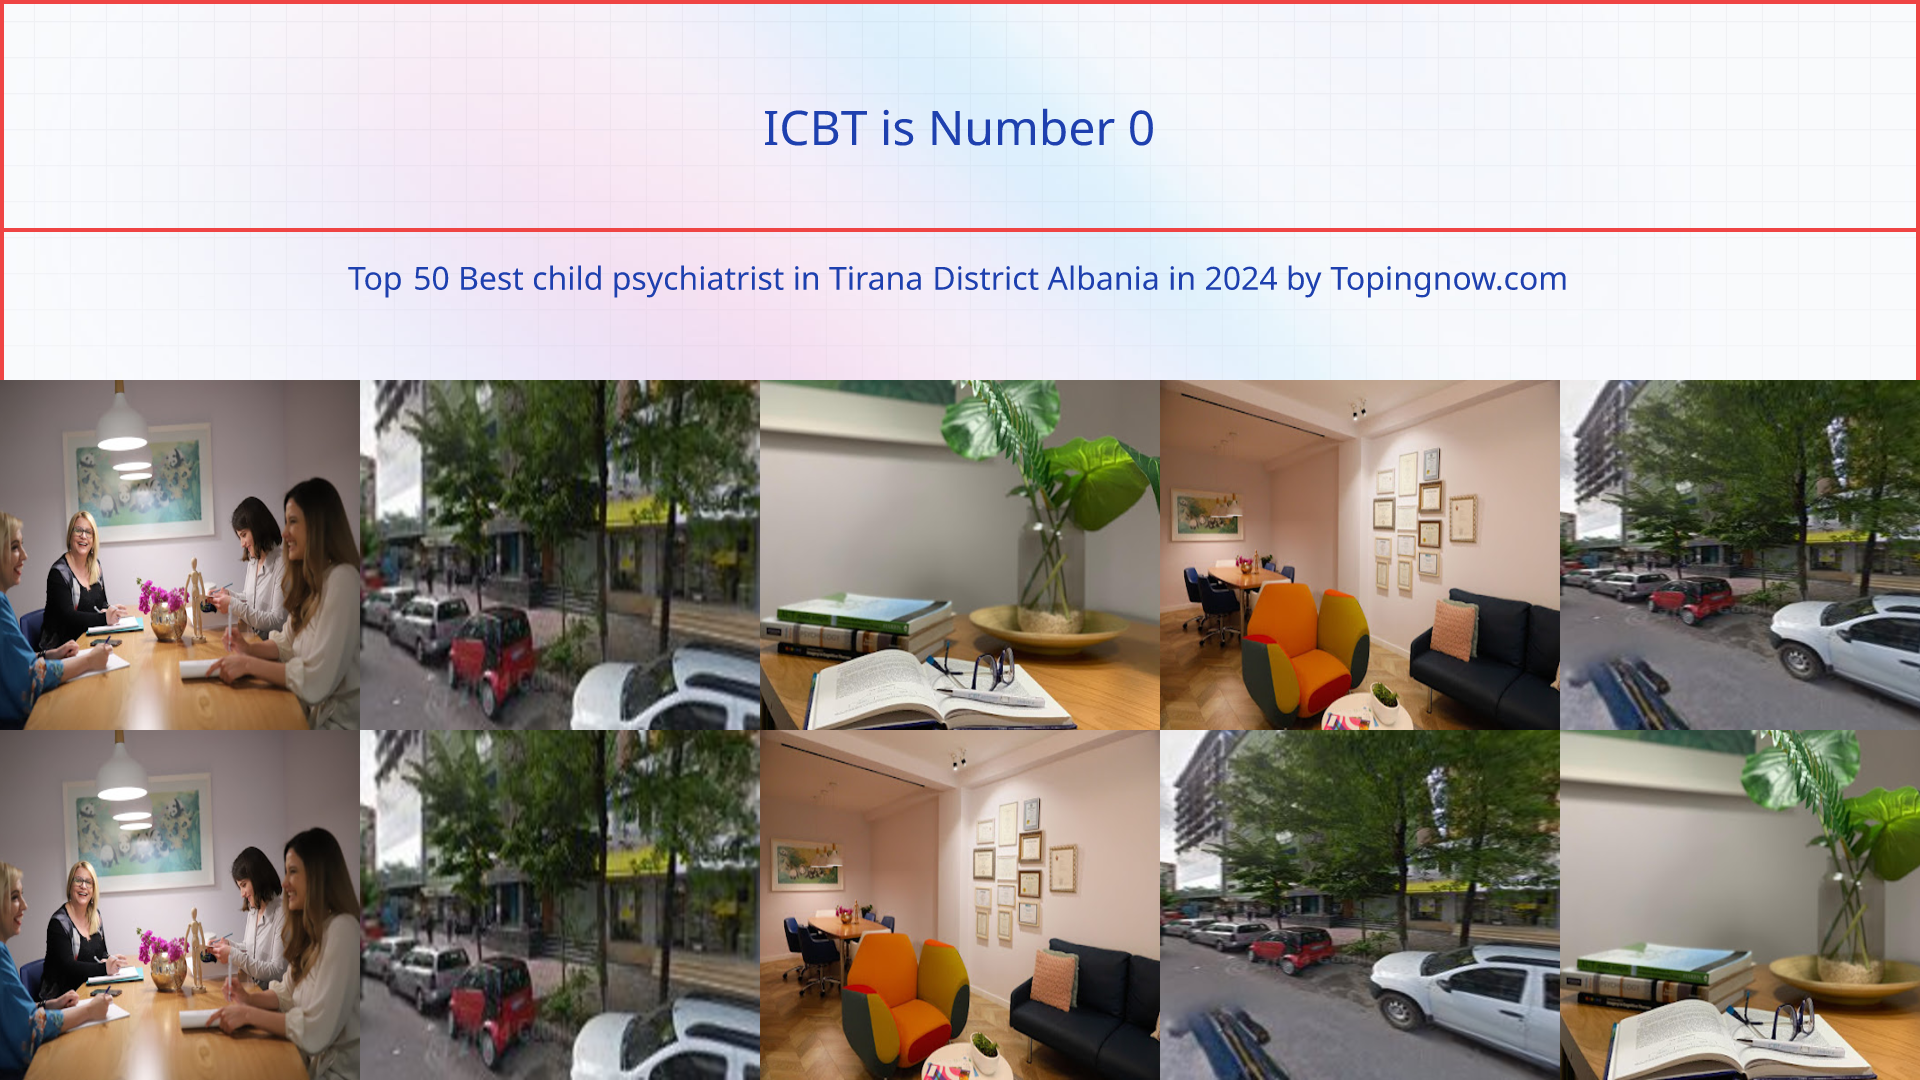 ICBT: Top 50 Best child psychiatrist in Tirana District Albania in 2024